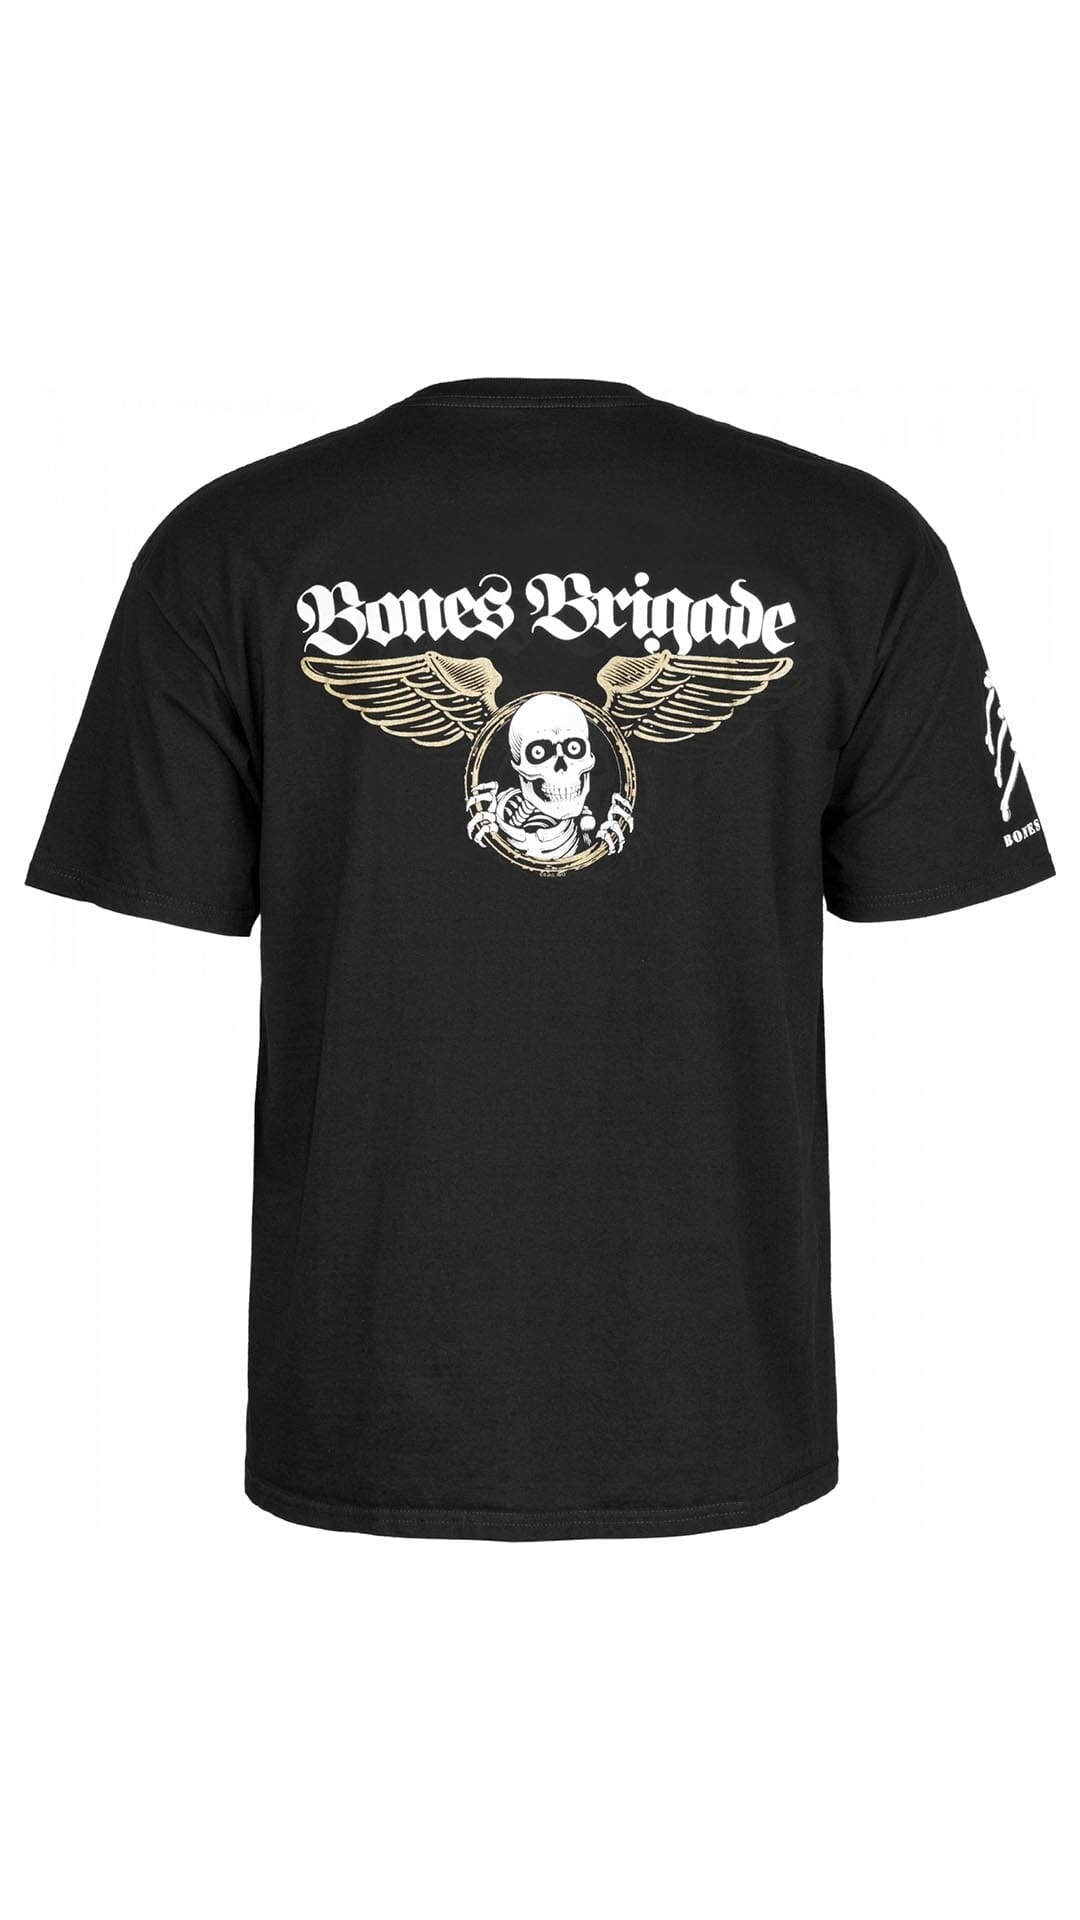 Powell Peralta Bones Brigade An Autobiography Black T-shirt PREORDER - Camiseta Ropa Powell Peralta 